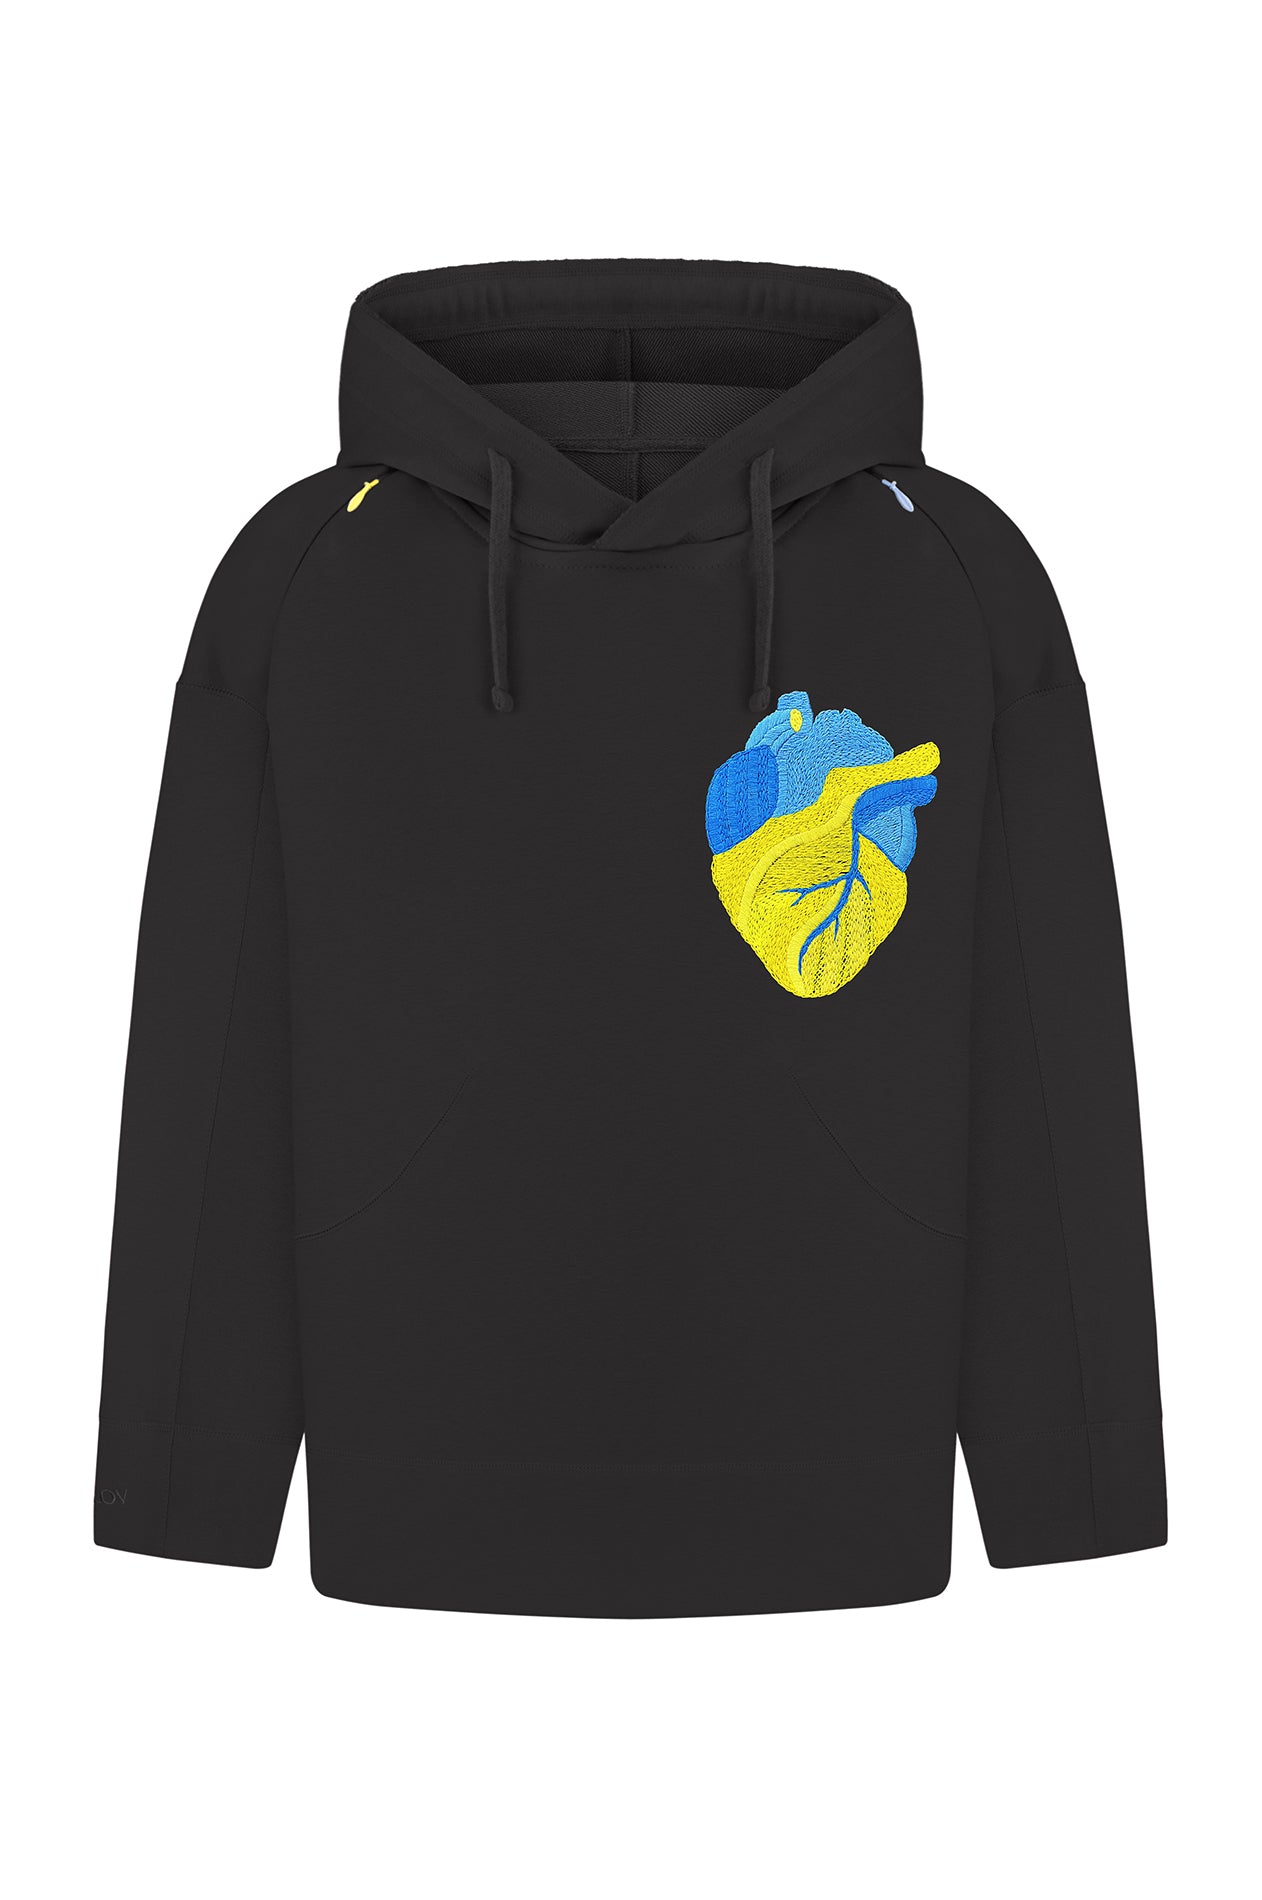 Black hoodie with handmade heart embroidery